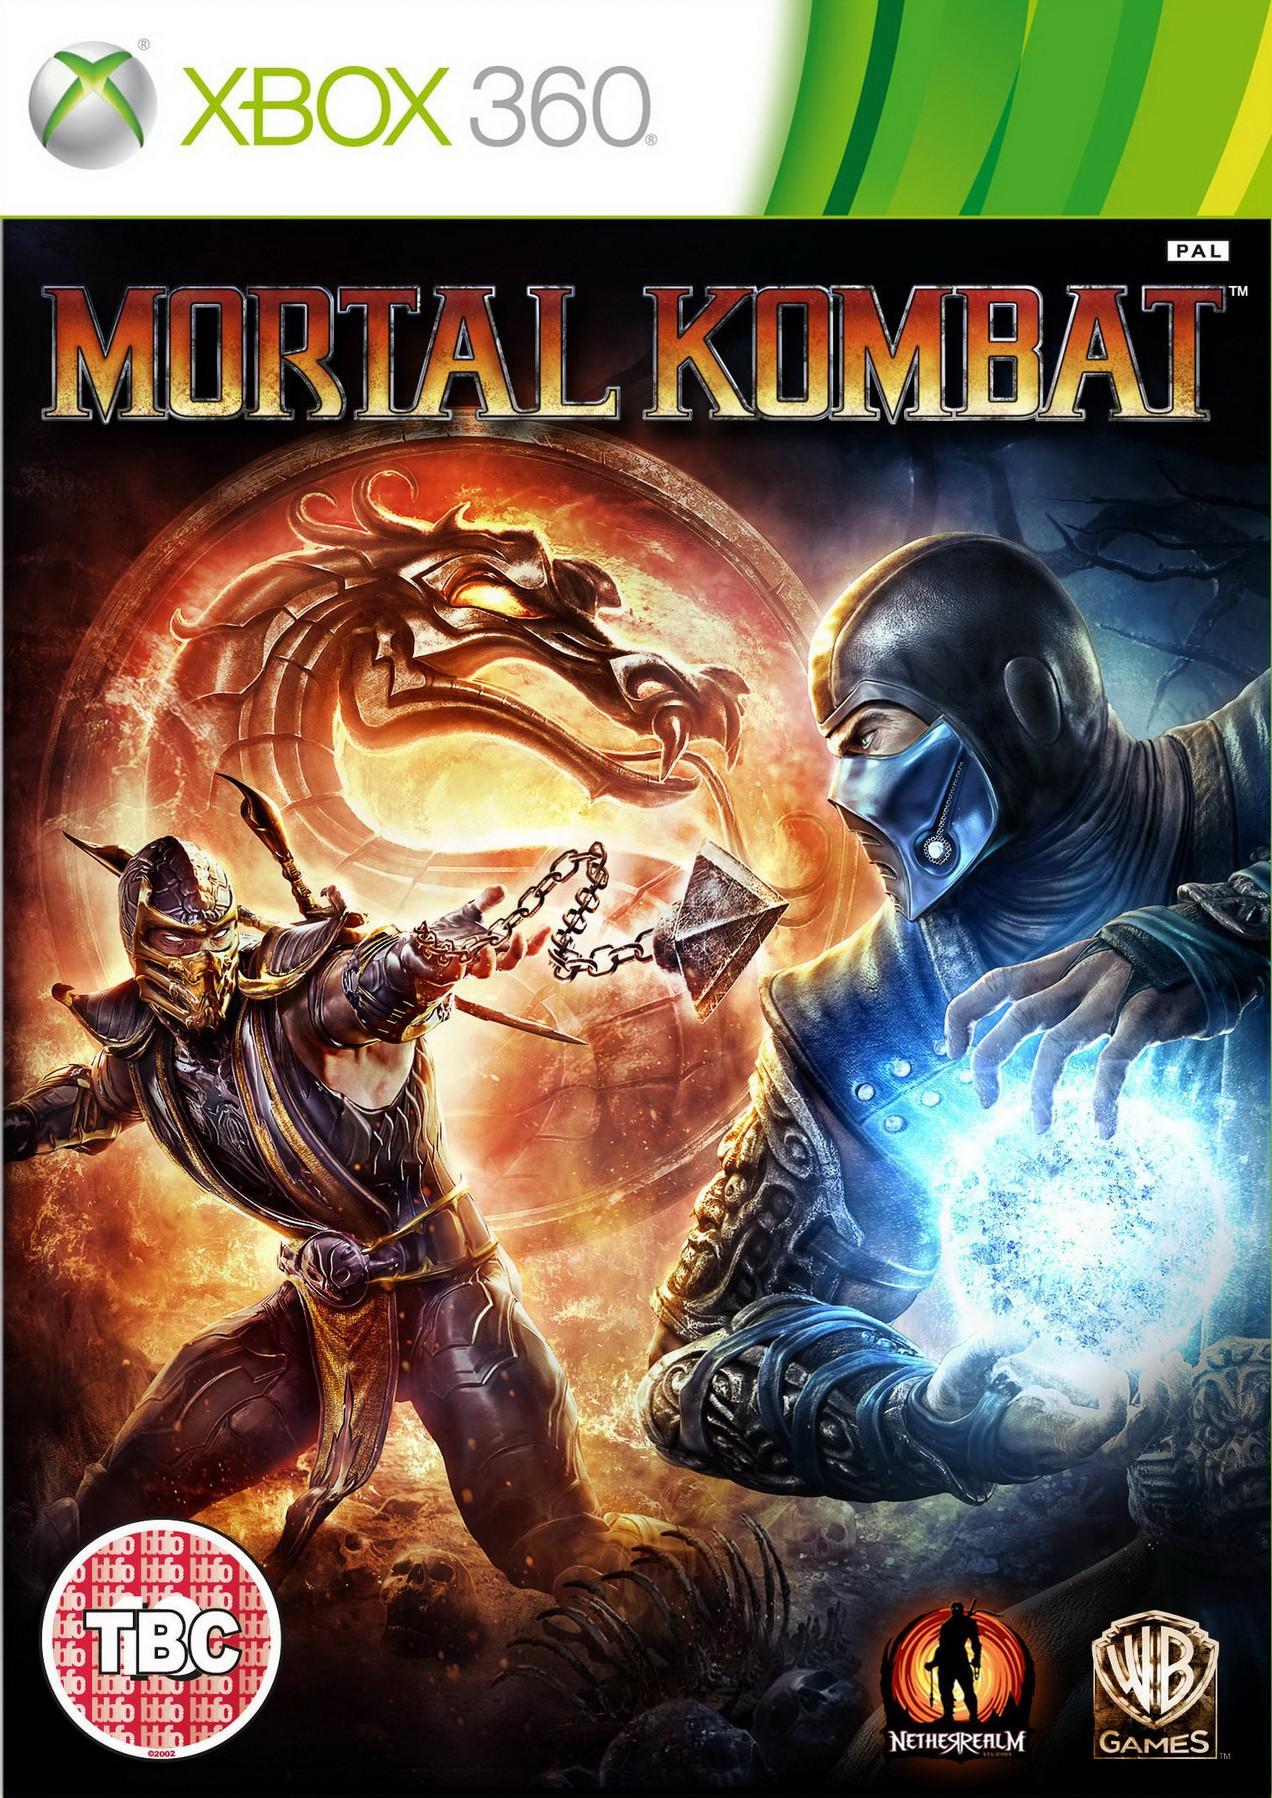 [Préco] Mortal Kombat – Edition Kollector